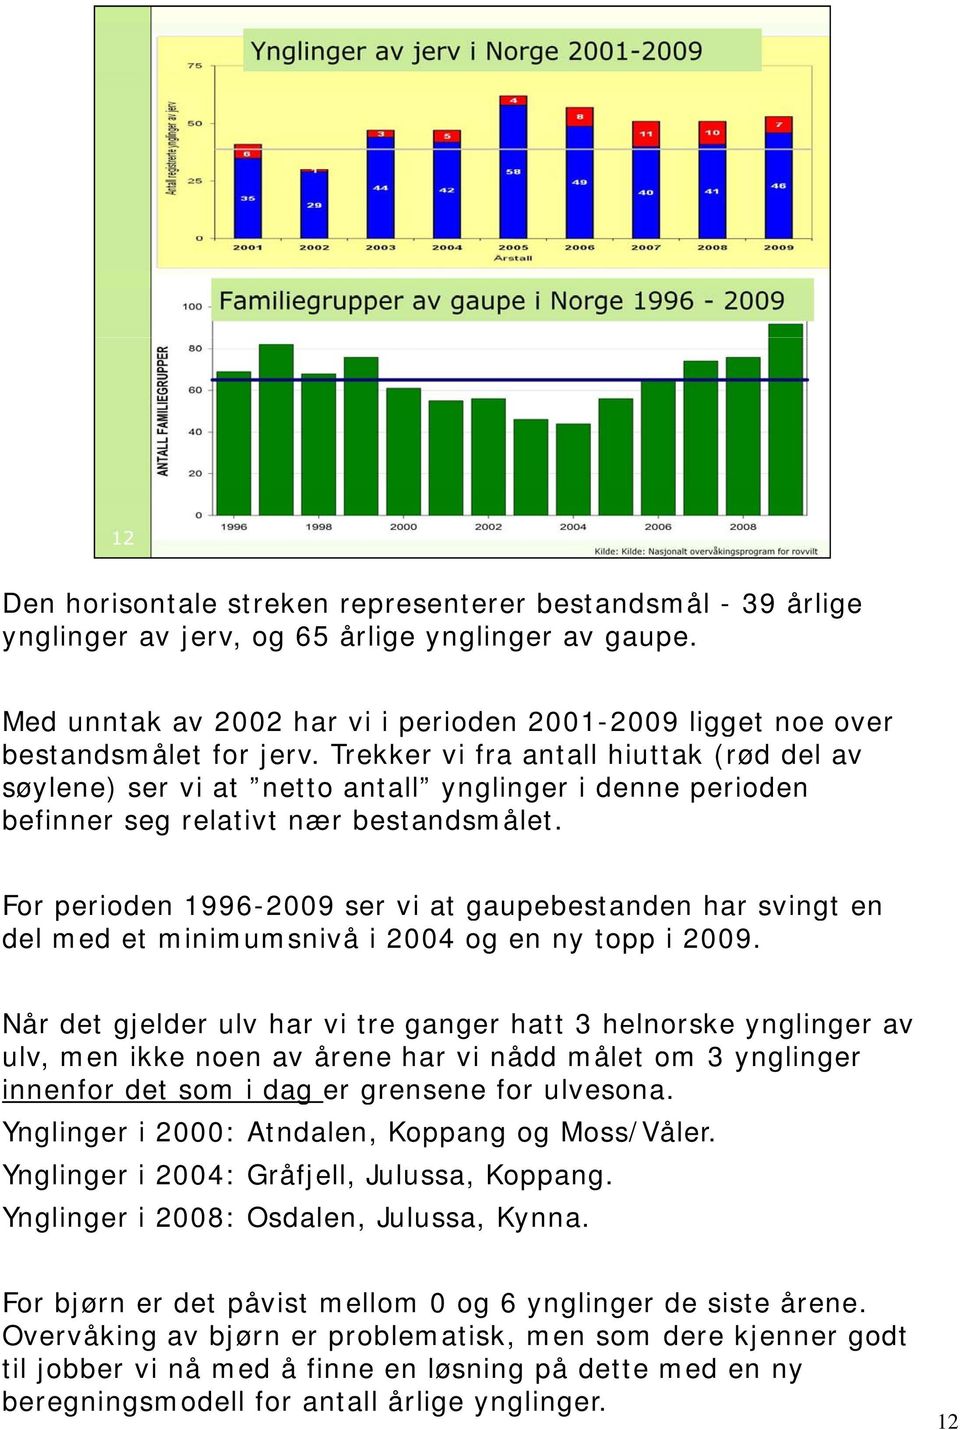 For perioden 1996-2009 ser vi at gaupebestanden har svingt en del med et minimumsnivå i 2004 og en ny topp i 2009.